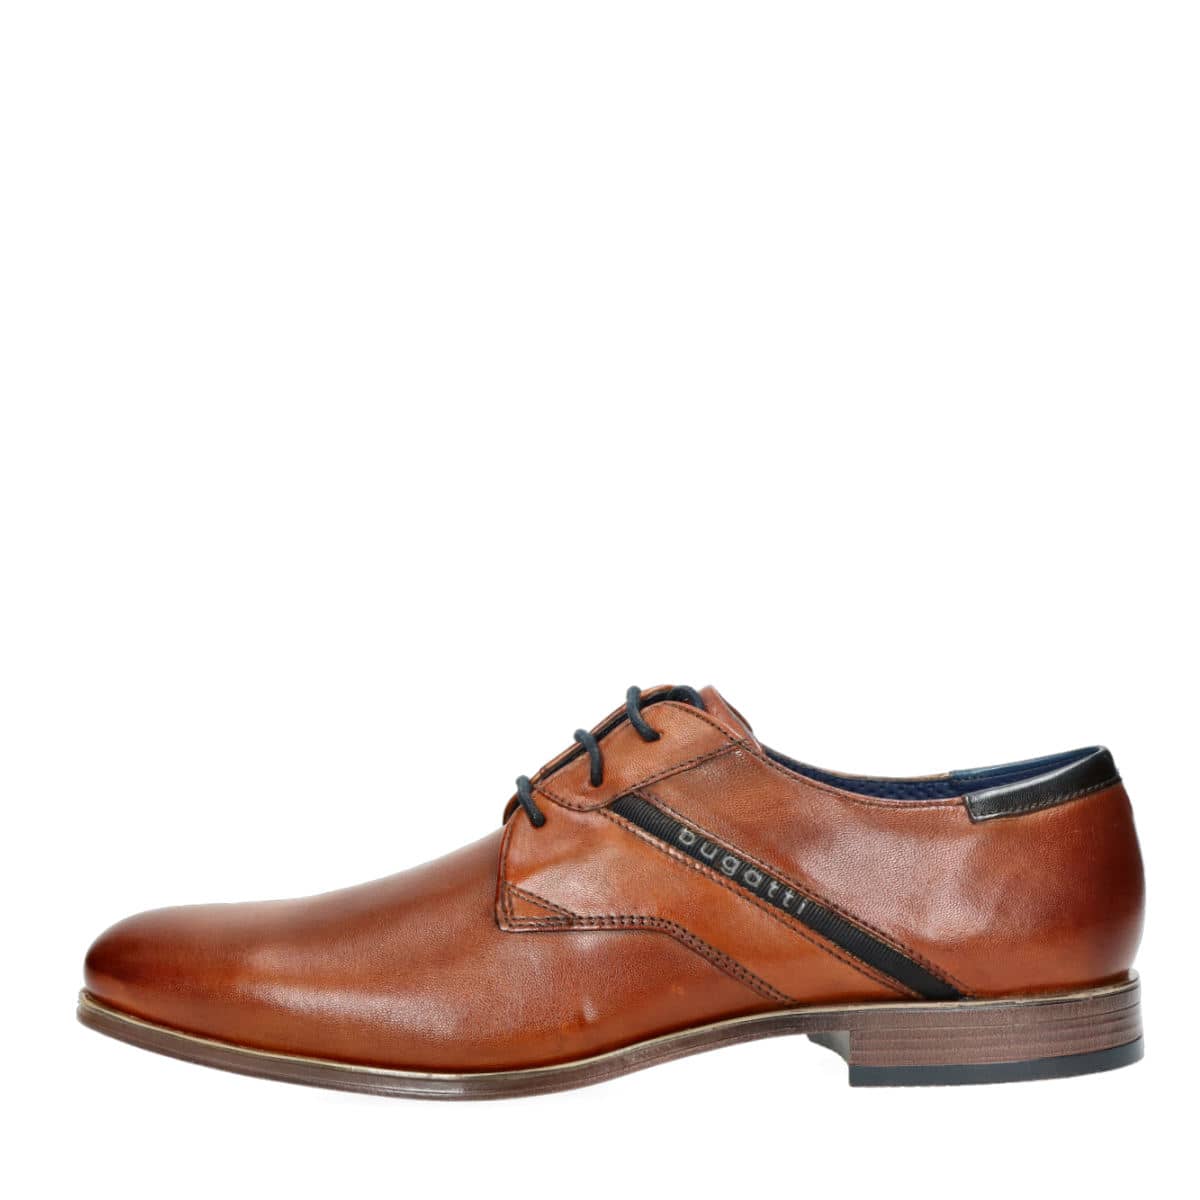 Bugatti men's leather formal shoes - cognac brown 